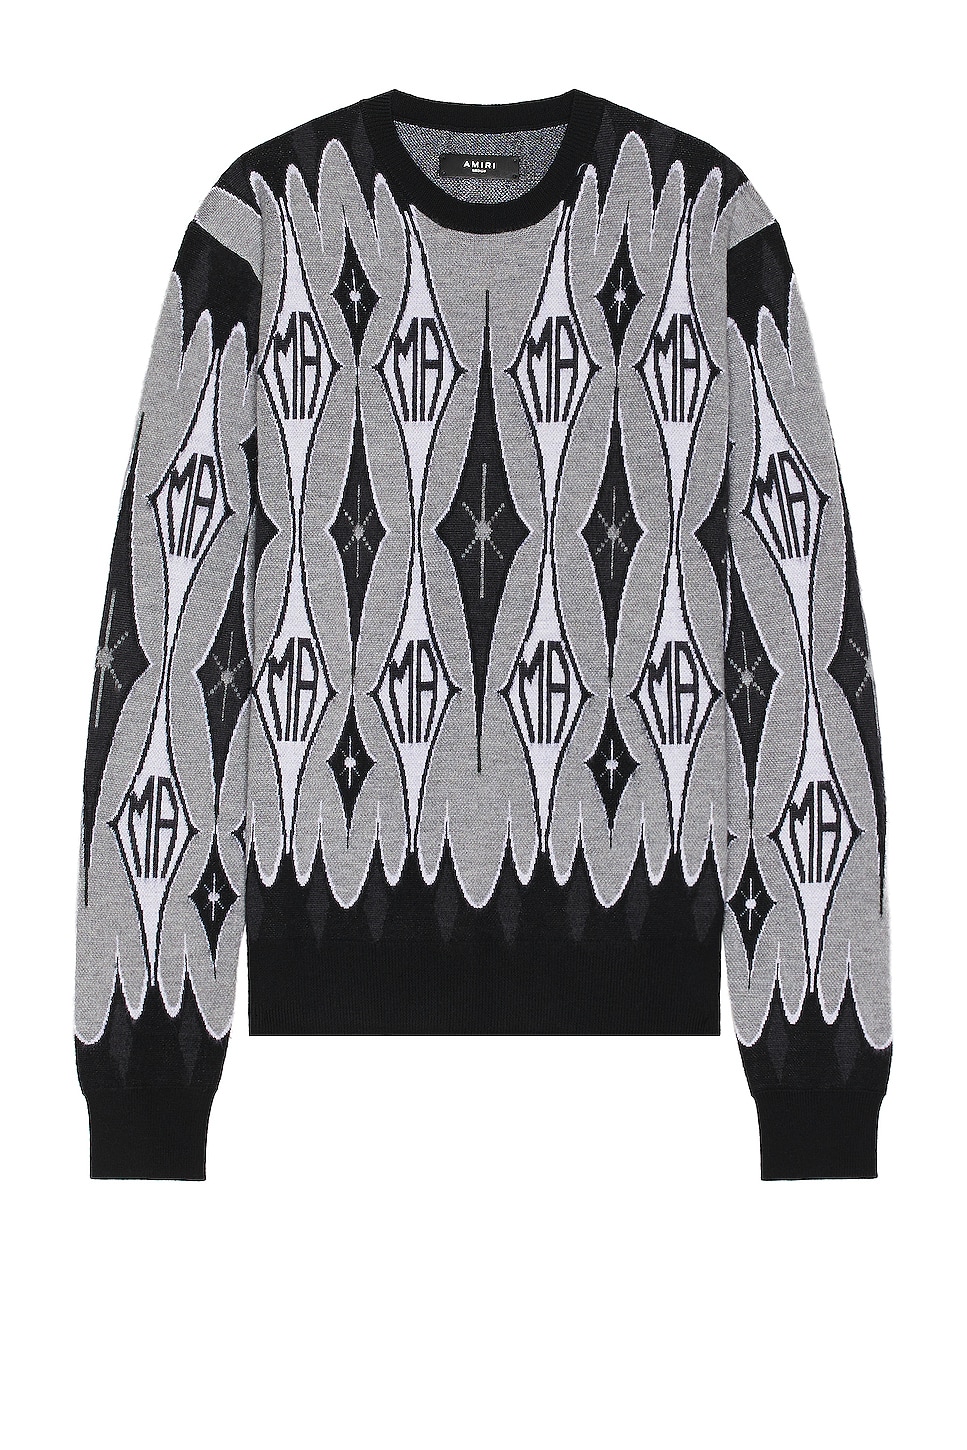 Image 1 of Amiri Argyle Jacquard Sweater in Black